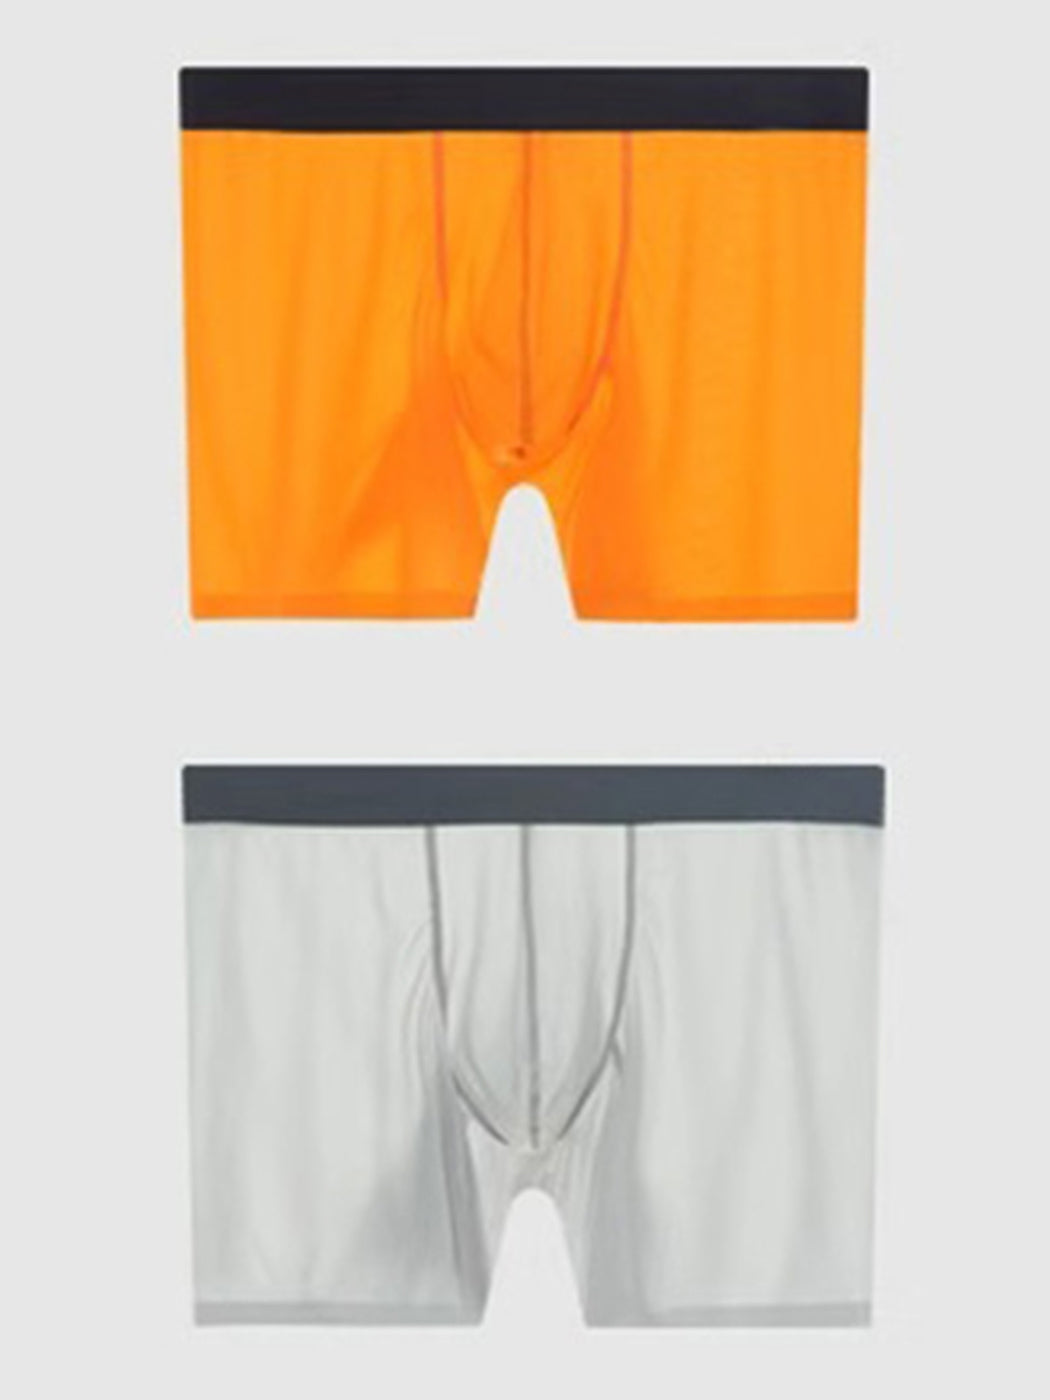 Ultra-Thin Transparent Wear-Resistant Running Extended Underwear